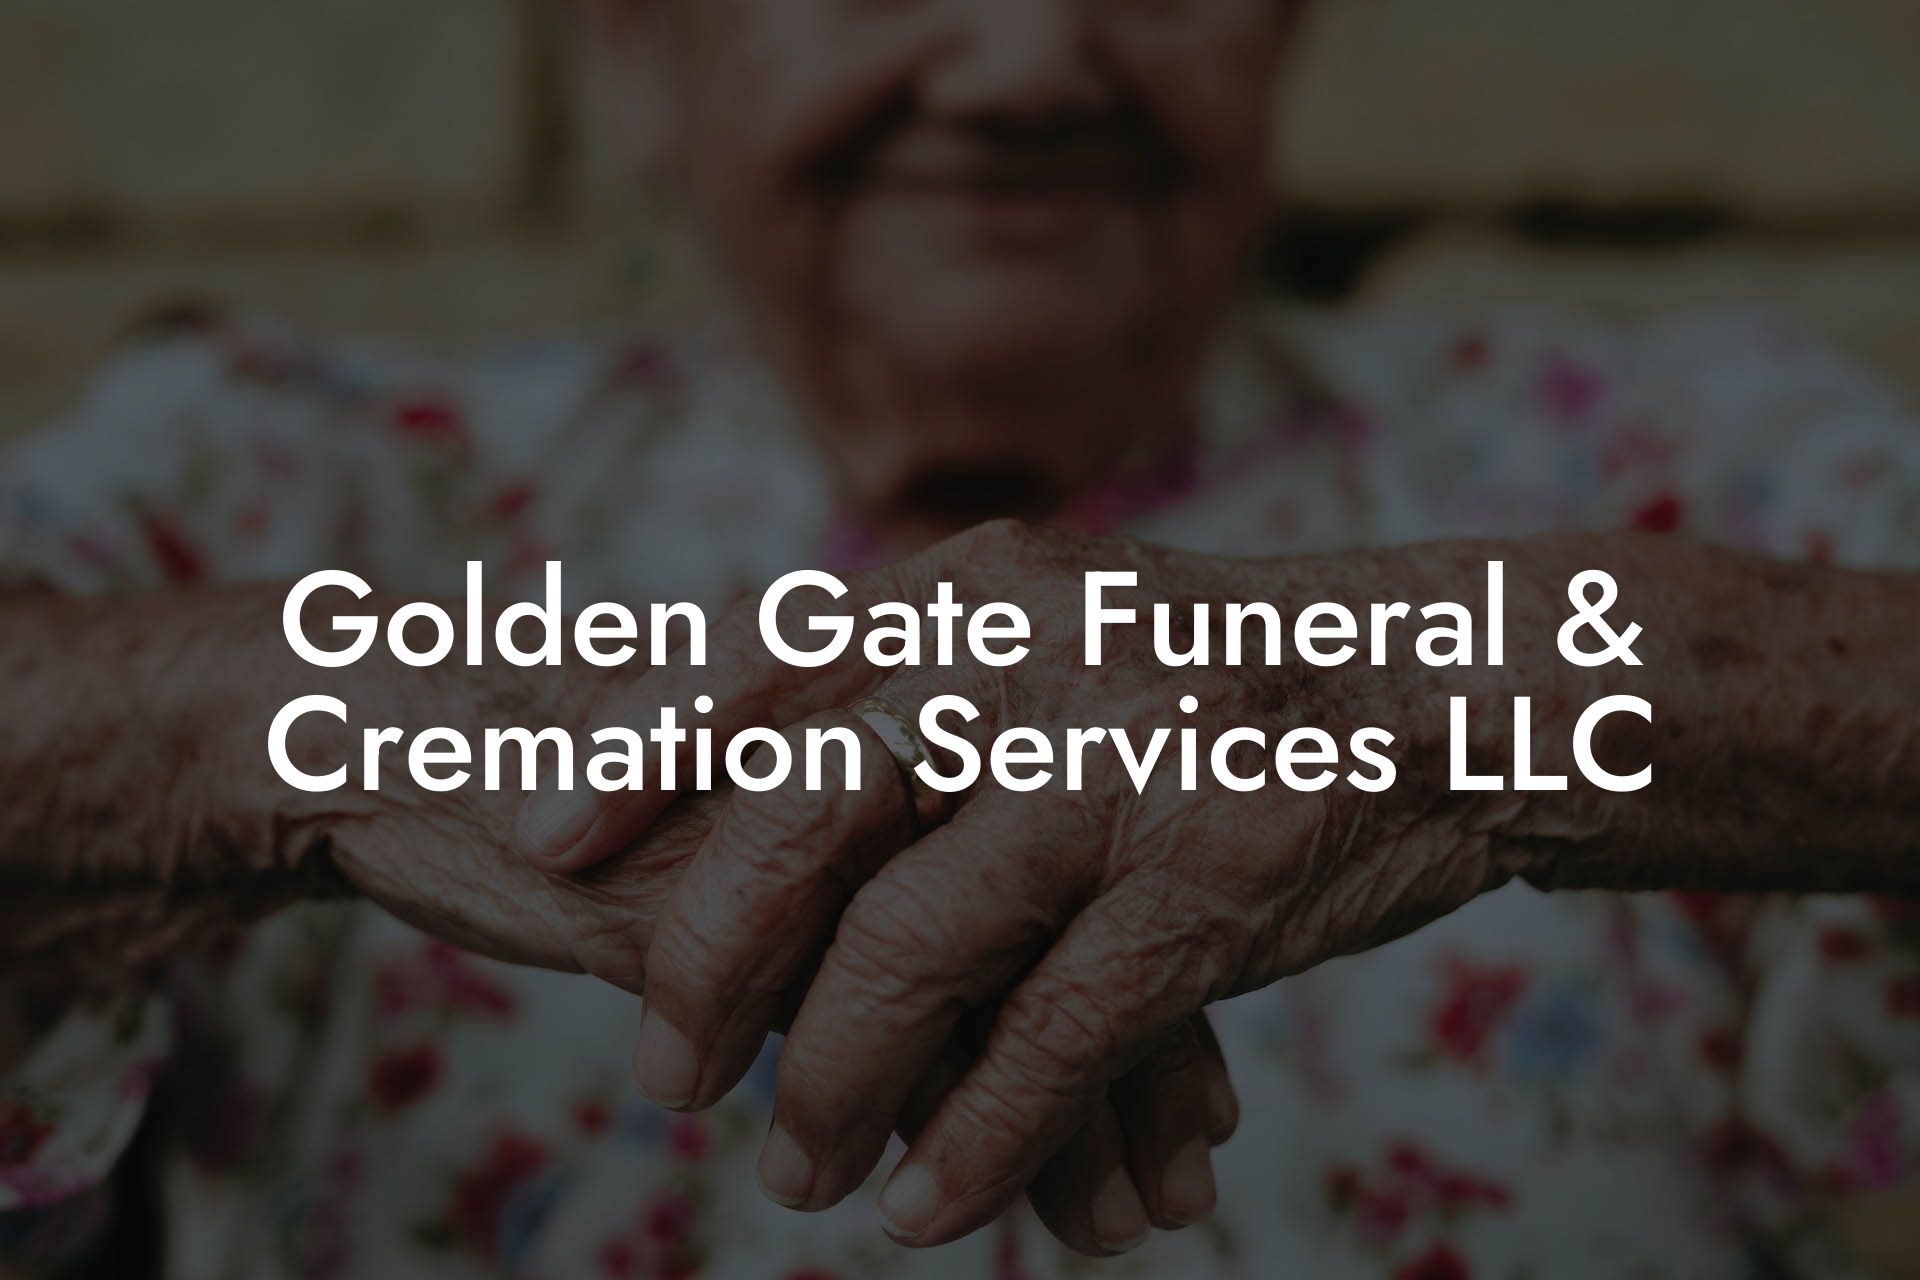 Golden Gate Funeral & Cremation Services LLC